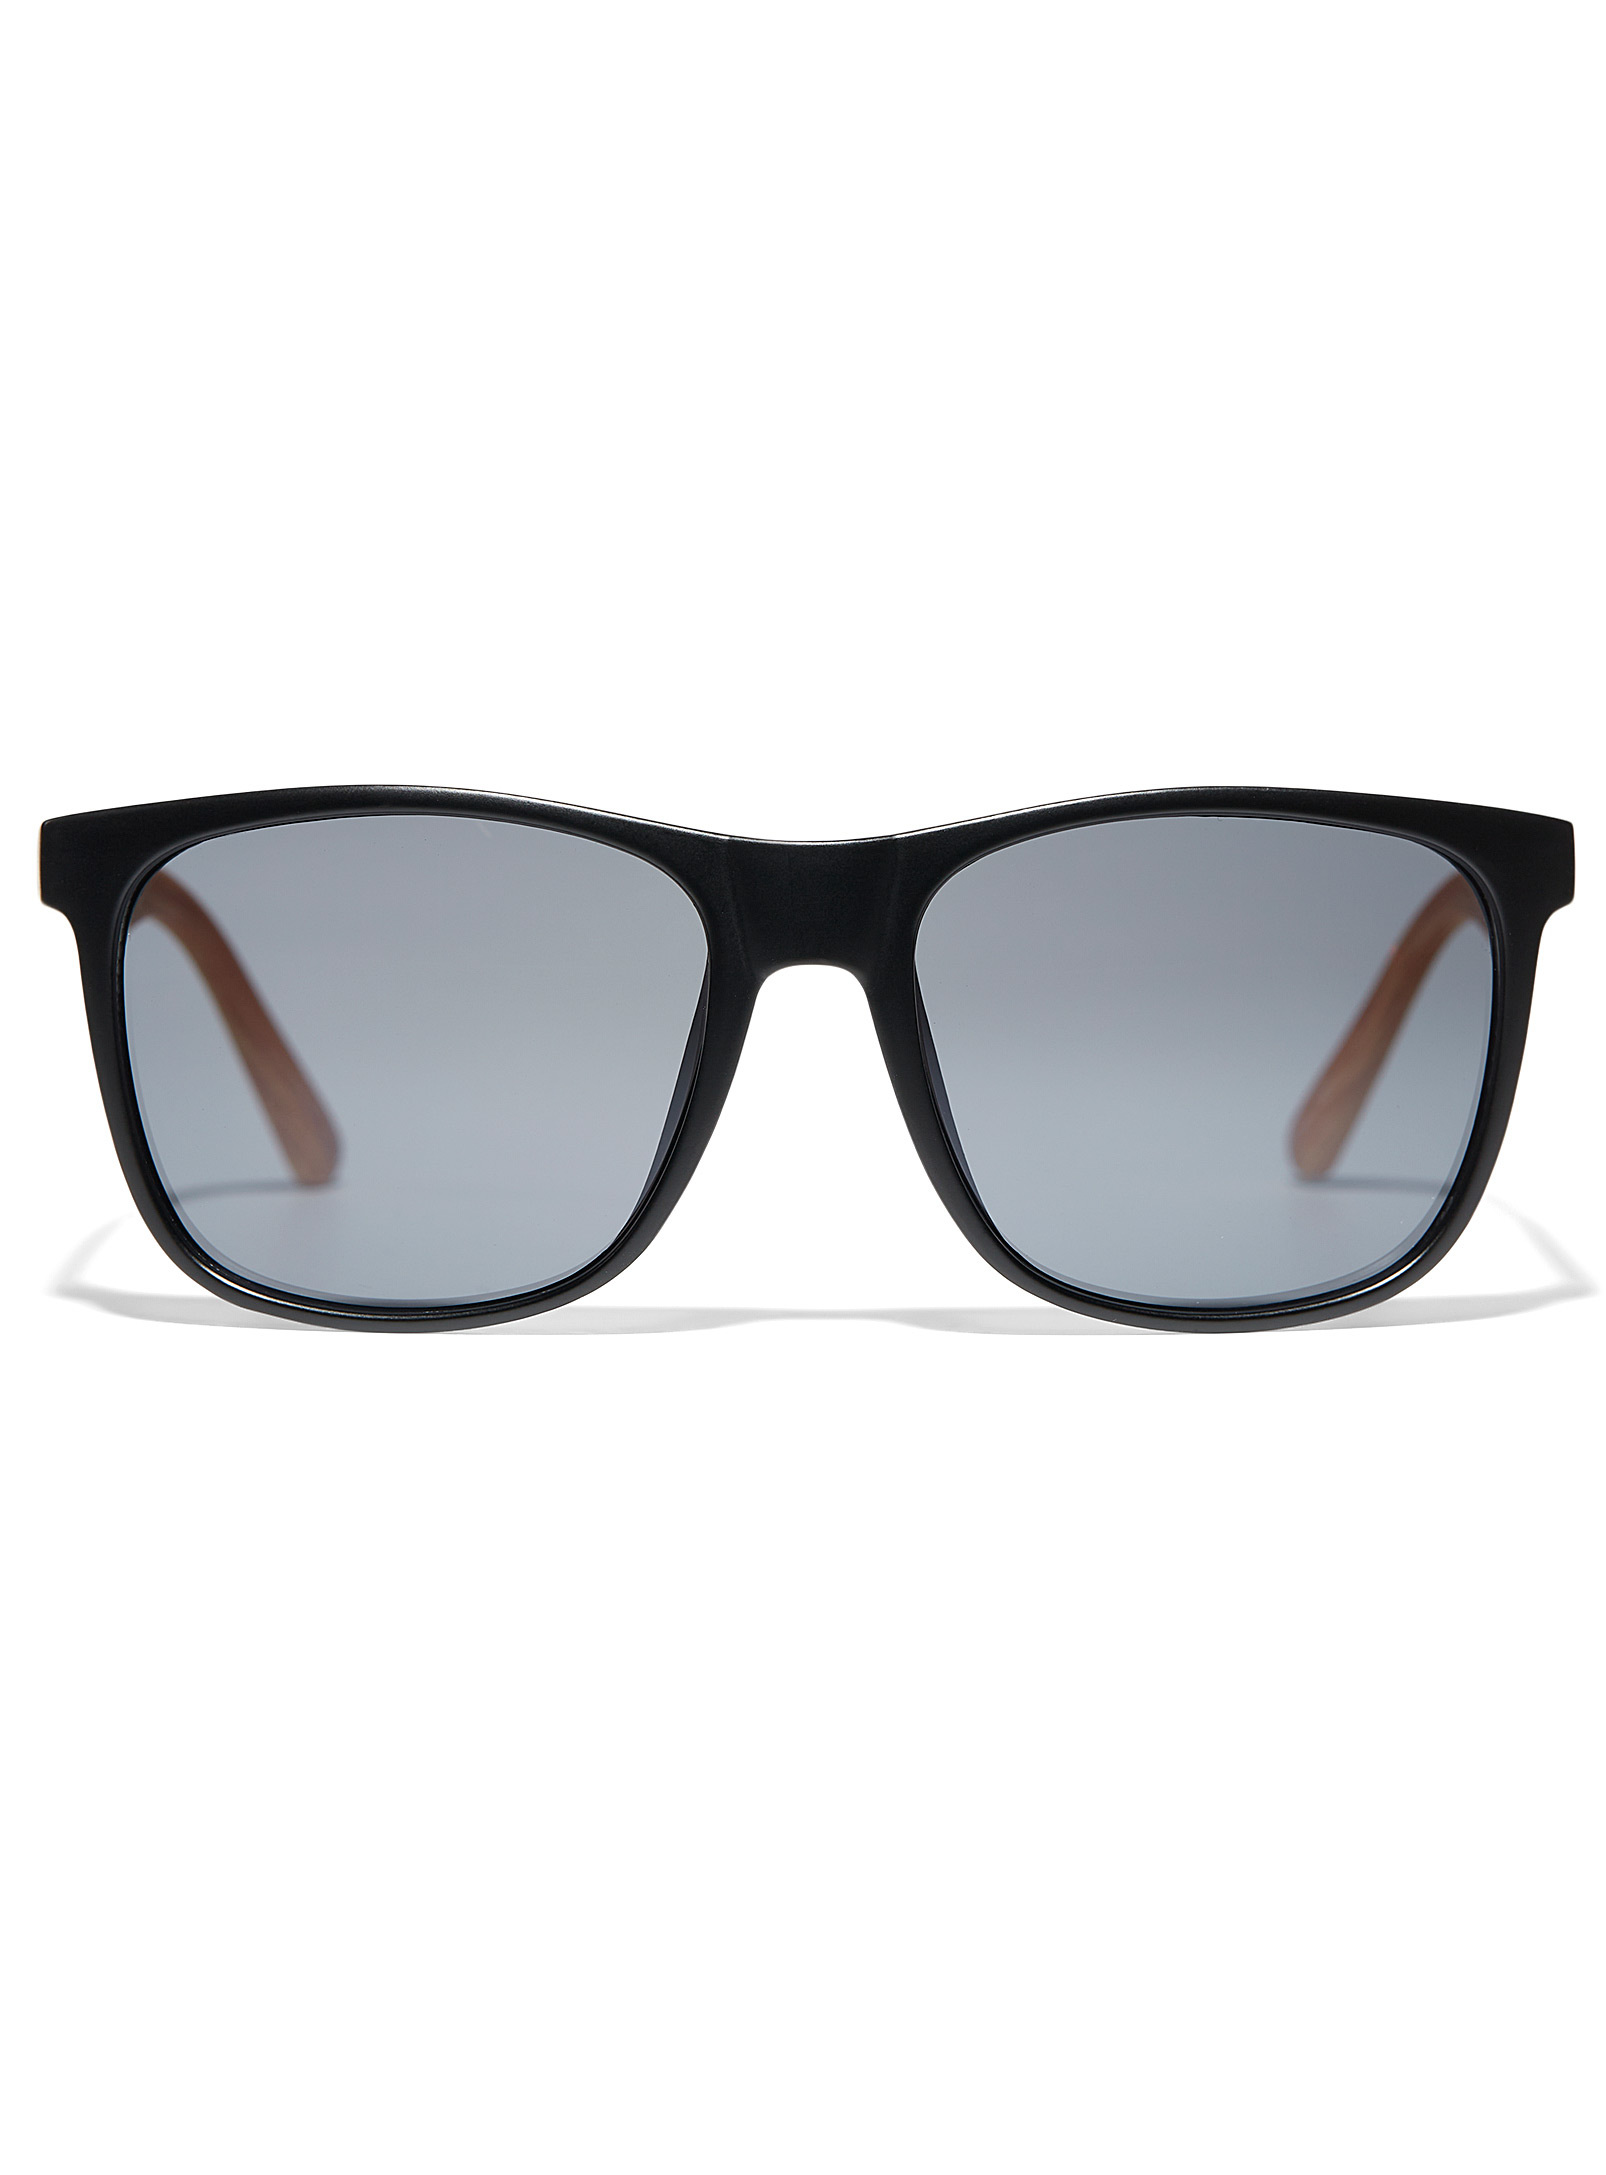 Le 31 - Men's Trent square sunglasses